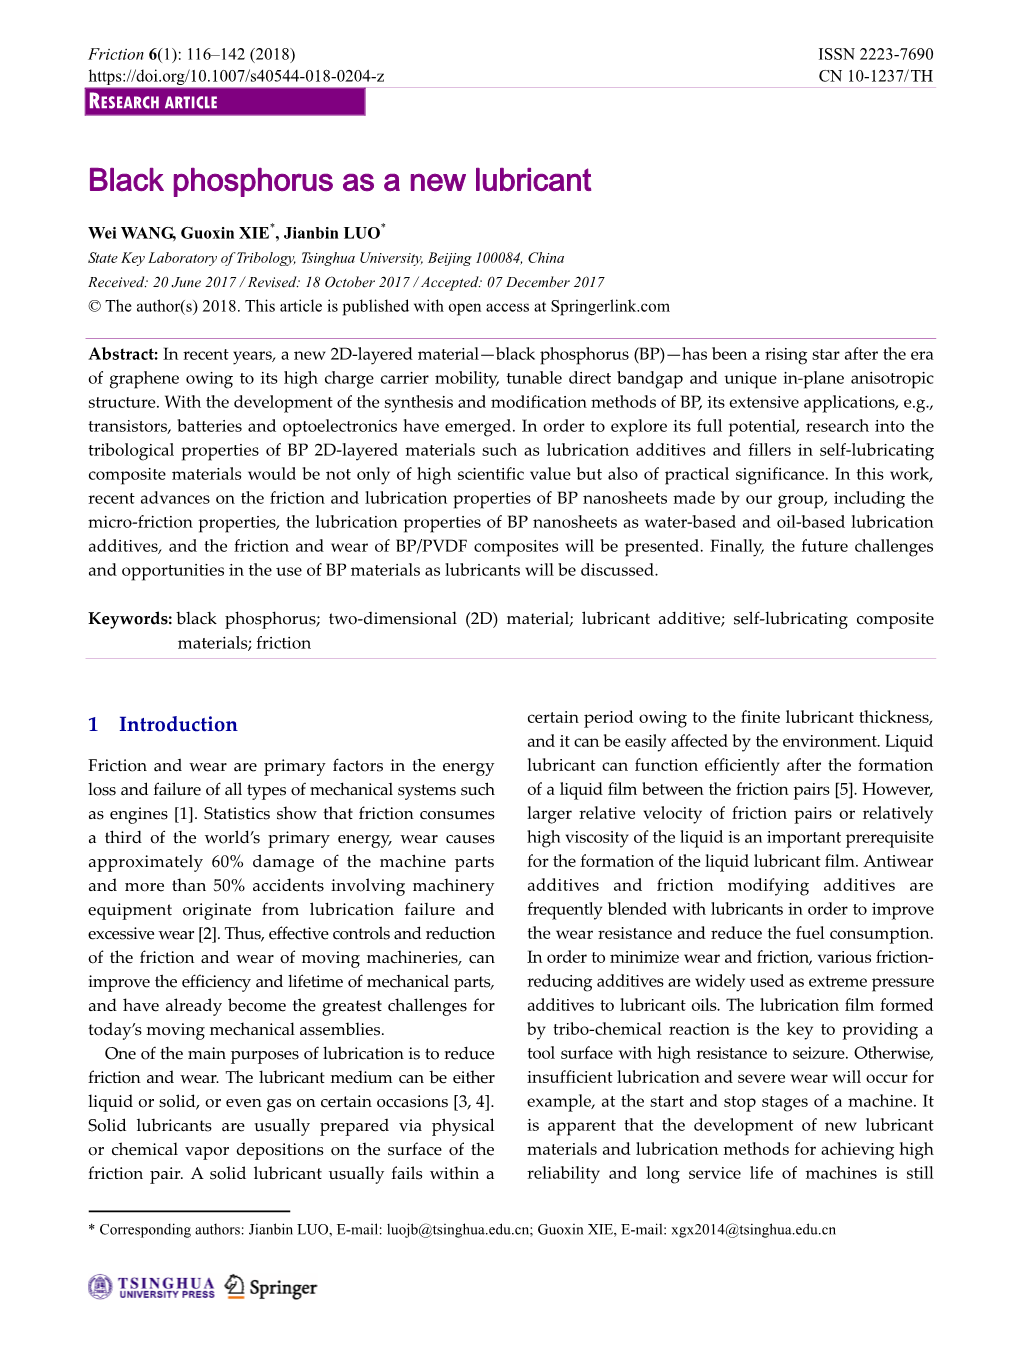 Black Phosphorus As a New Lubricant